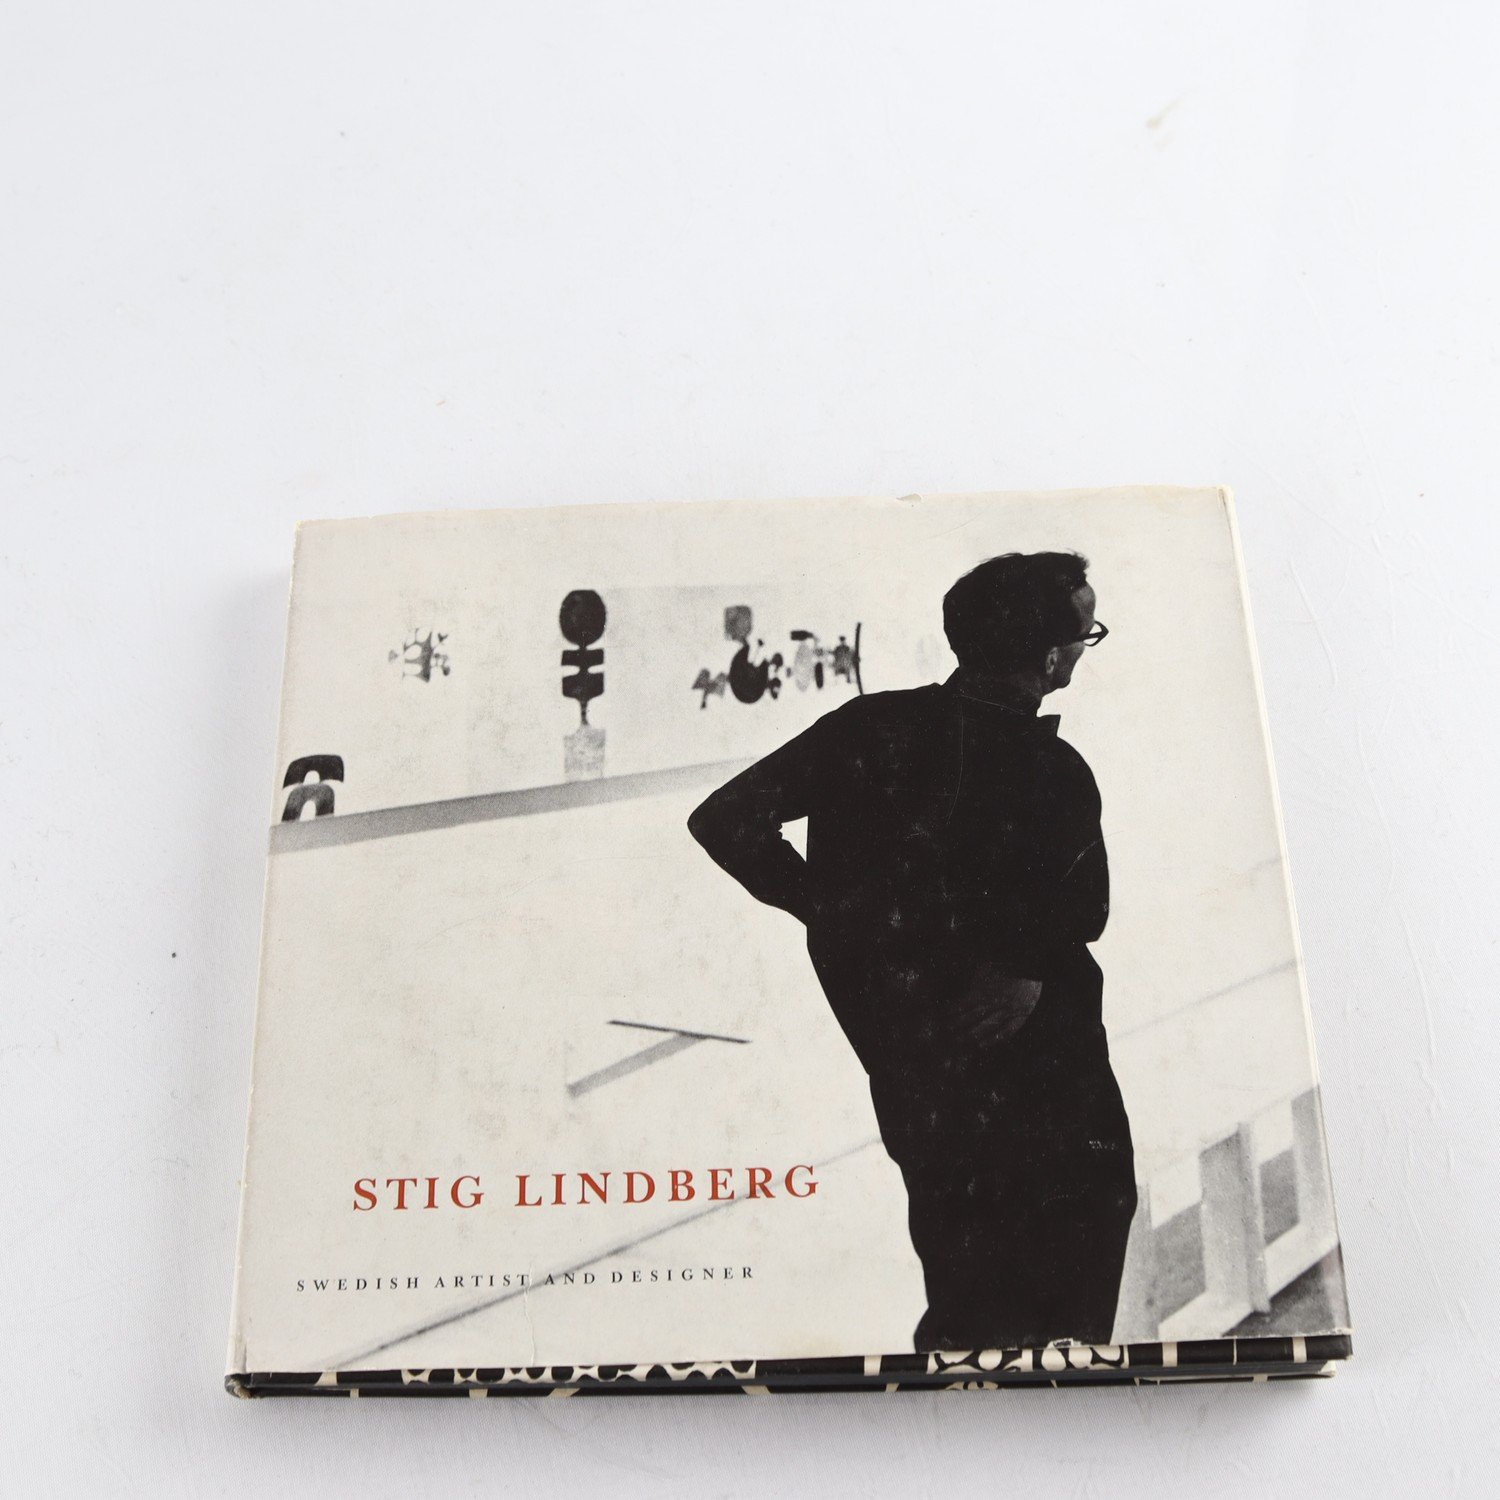 Stig Lindberg: Swedish Artist and Designer, B. Klyvare & D. Widman